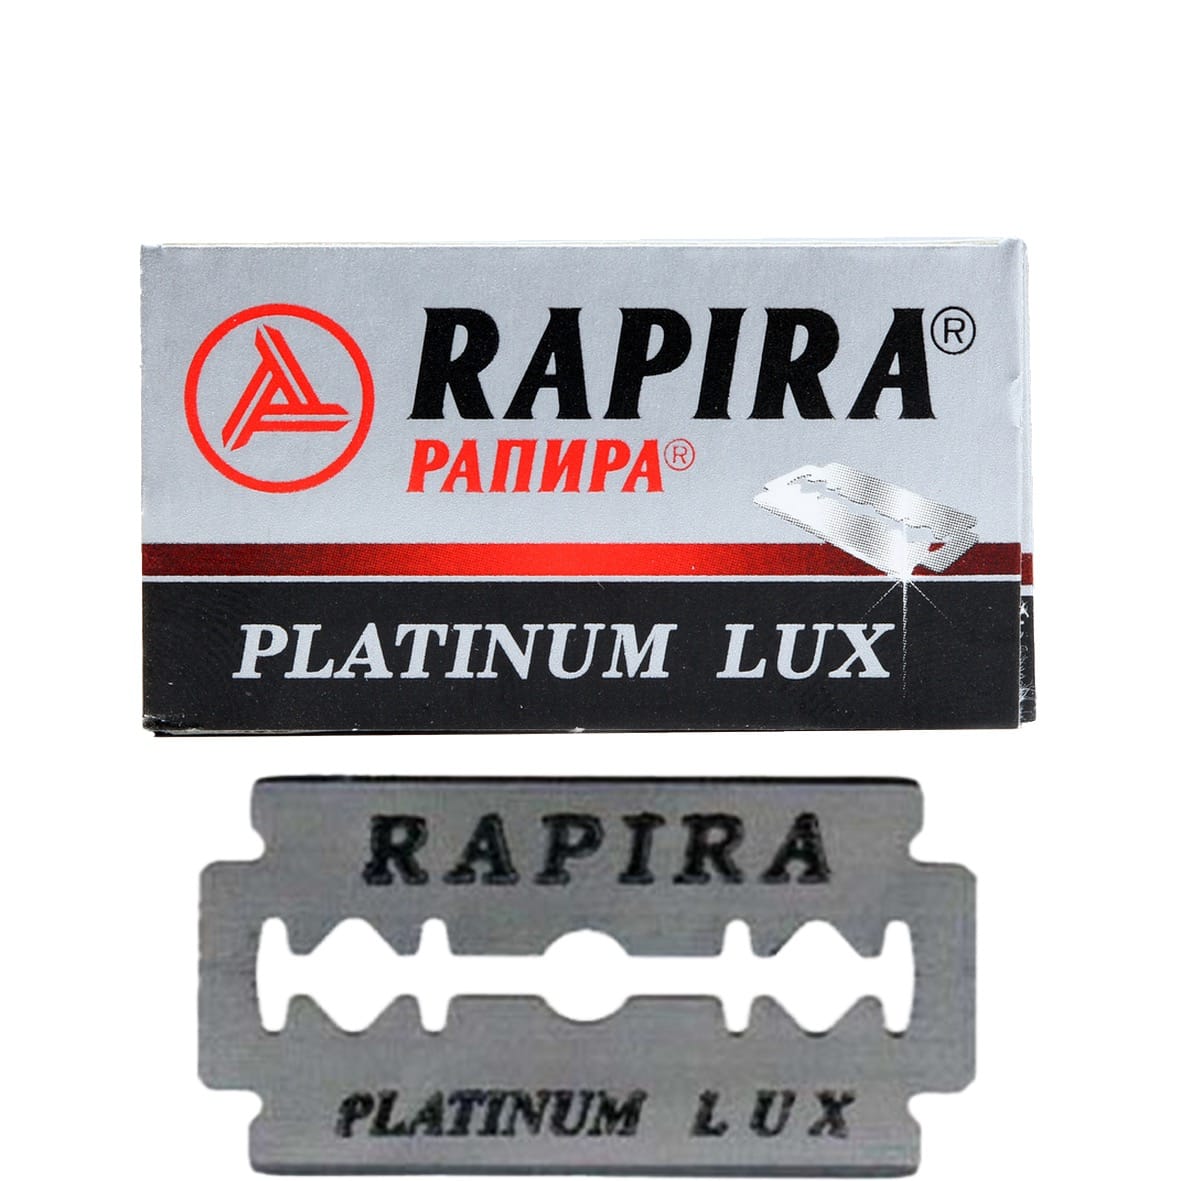 Rapira Double Edge Blades Lux Platinum - 1.2 - BOX-DEB-RAPIRA